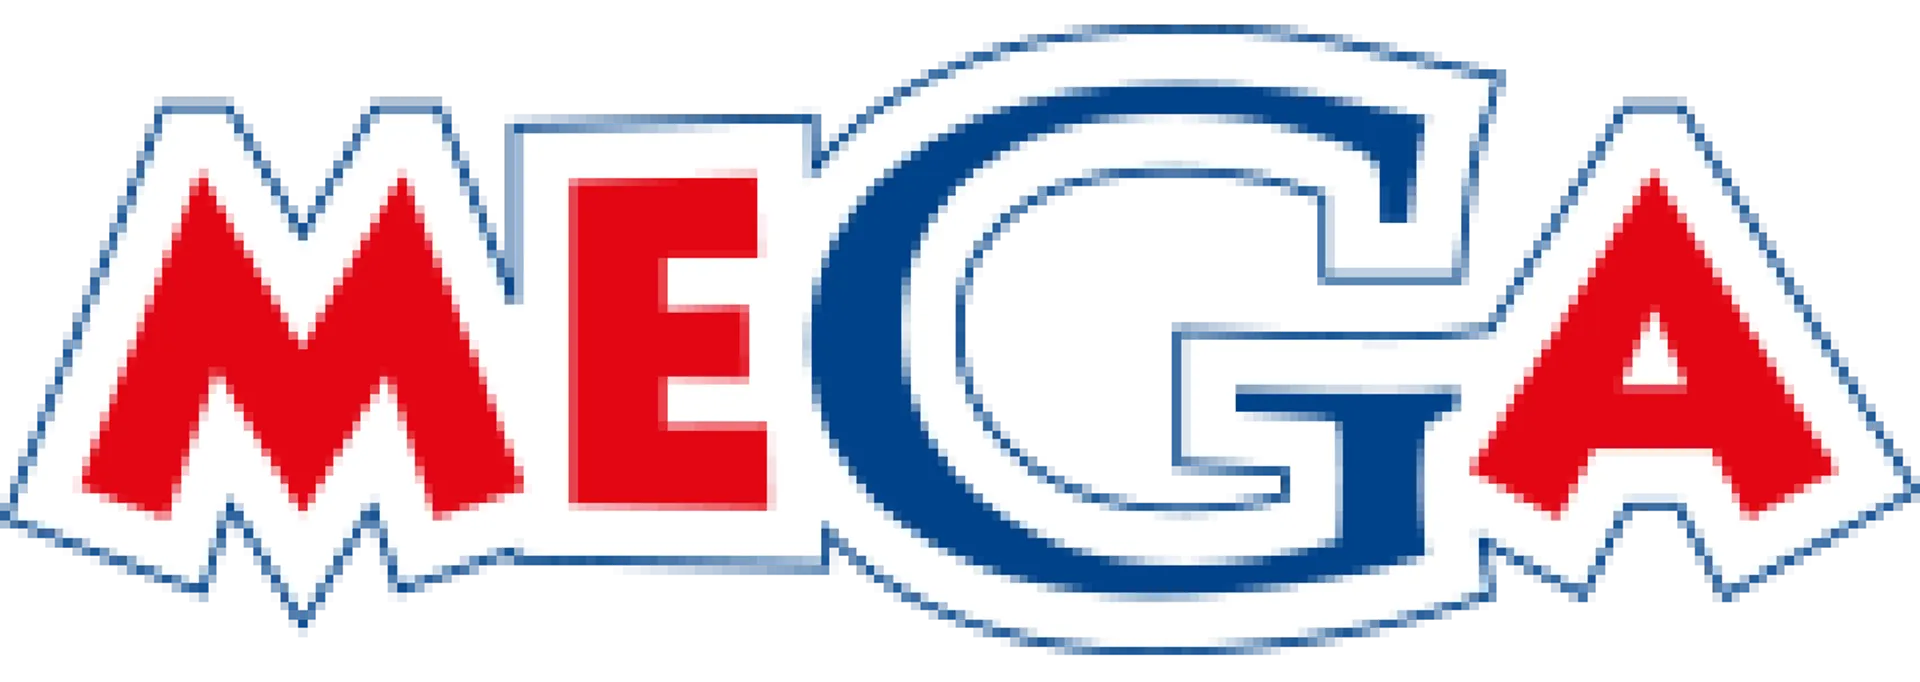 MEGA logo